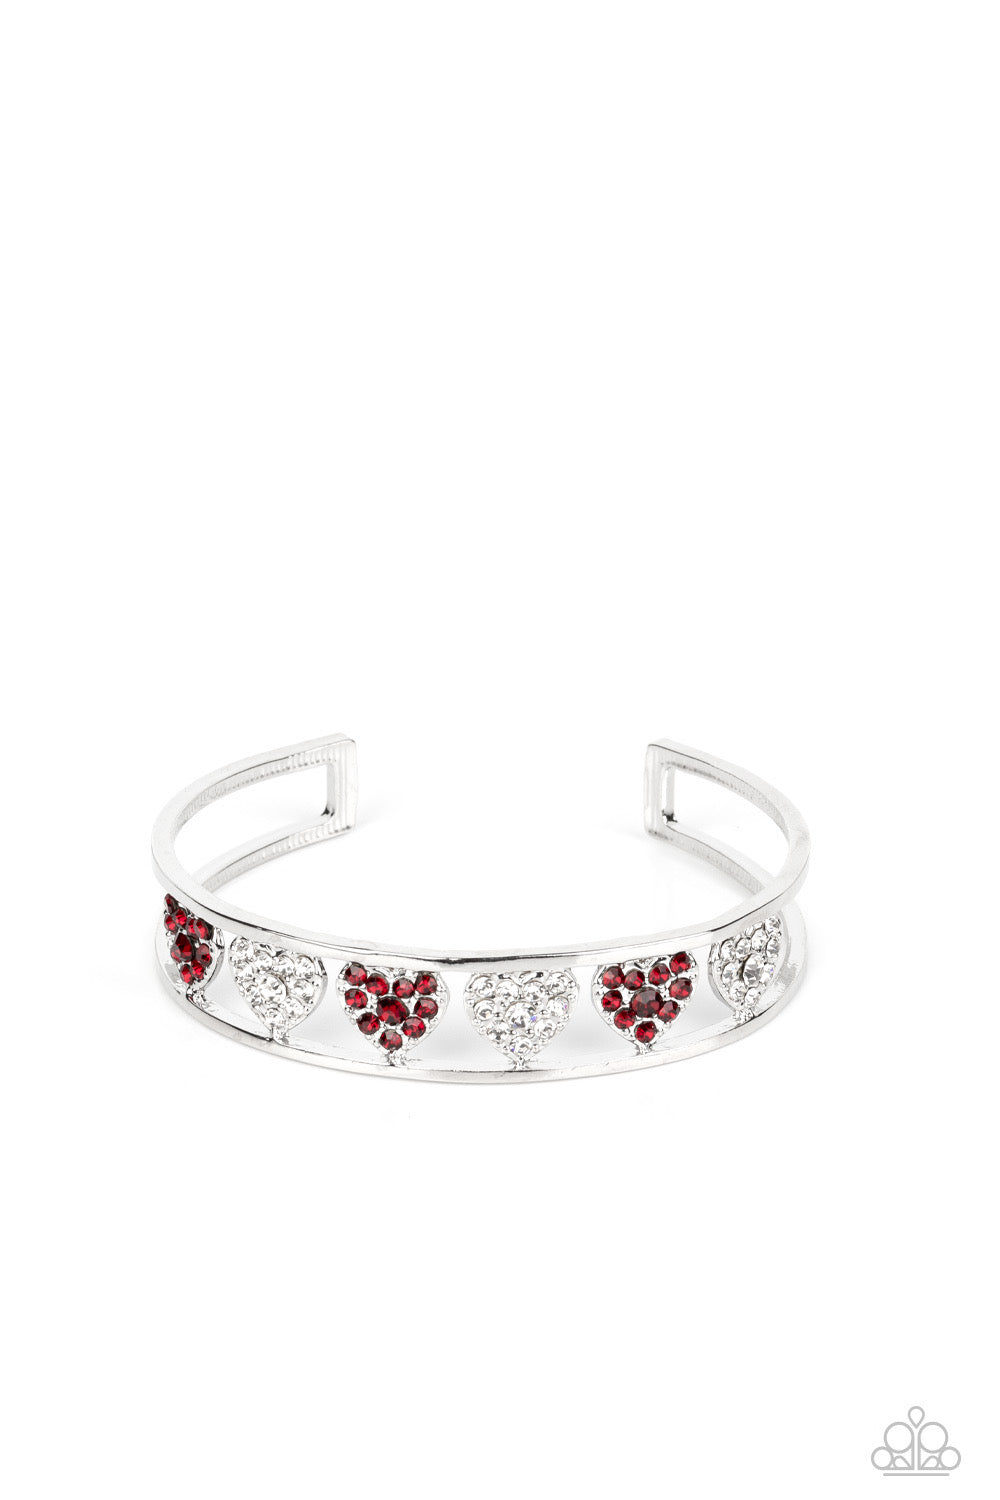 Decadent Devotion - Red Bracelet - Cute Bracelets - Paparazzi Jewelry Images 